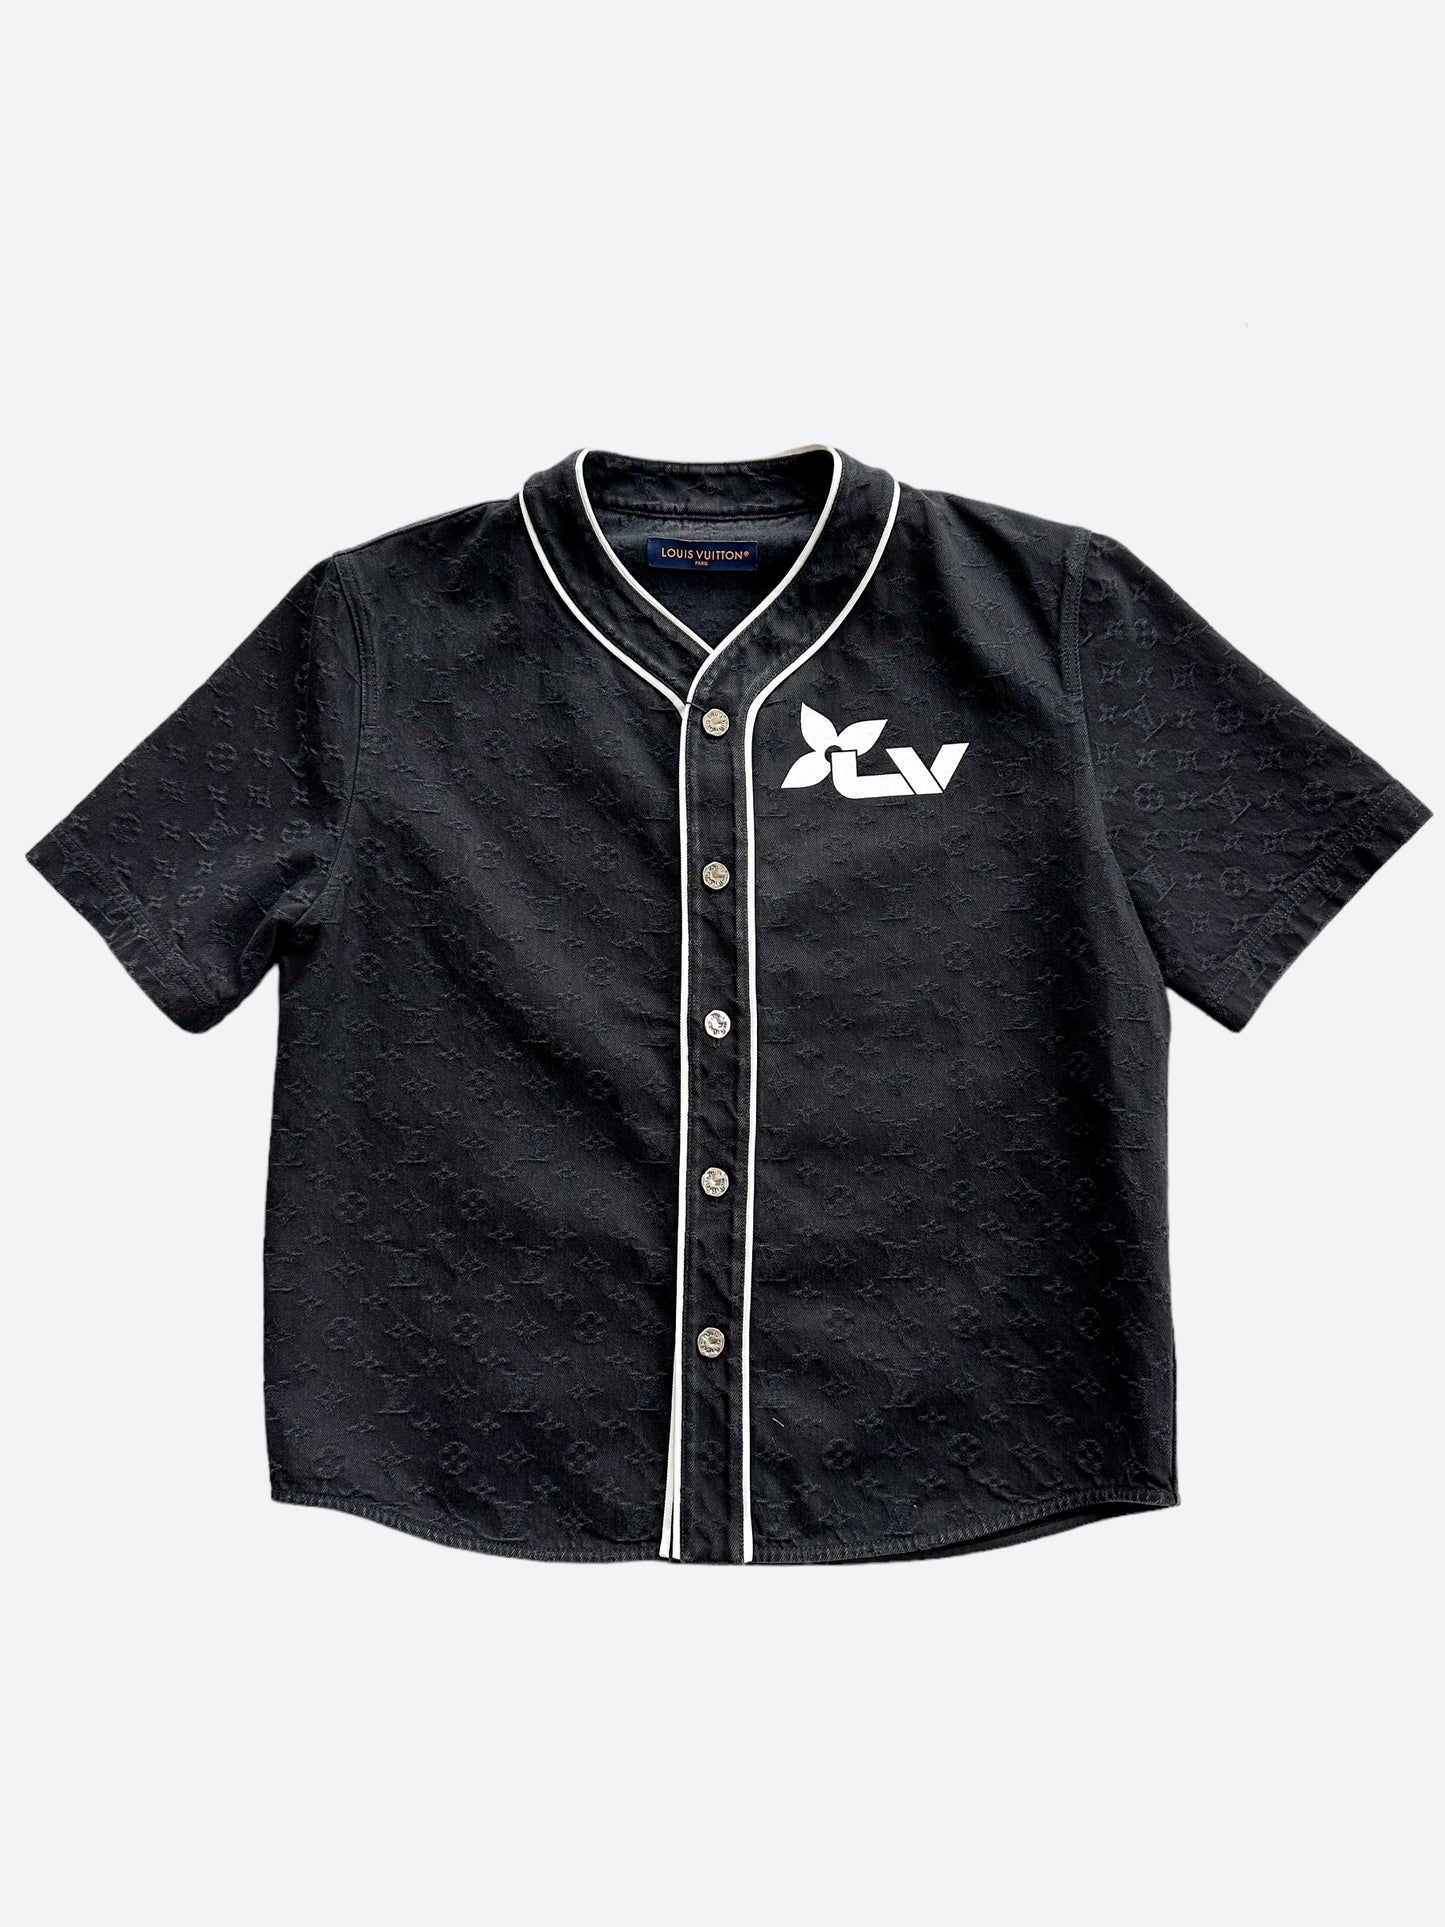 Louis Vuitton x Supreme Monogram Denim Baseball Shirt - Blue